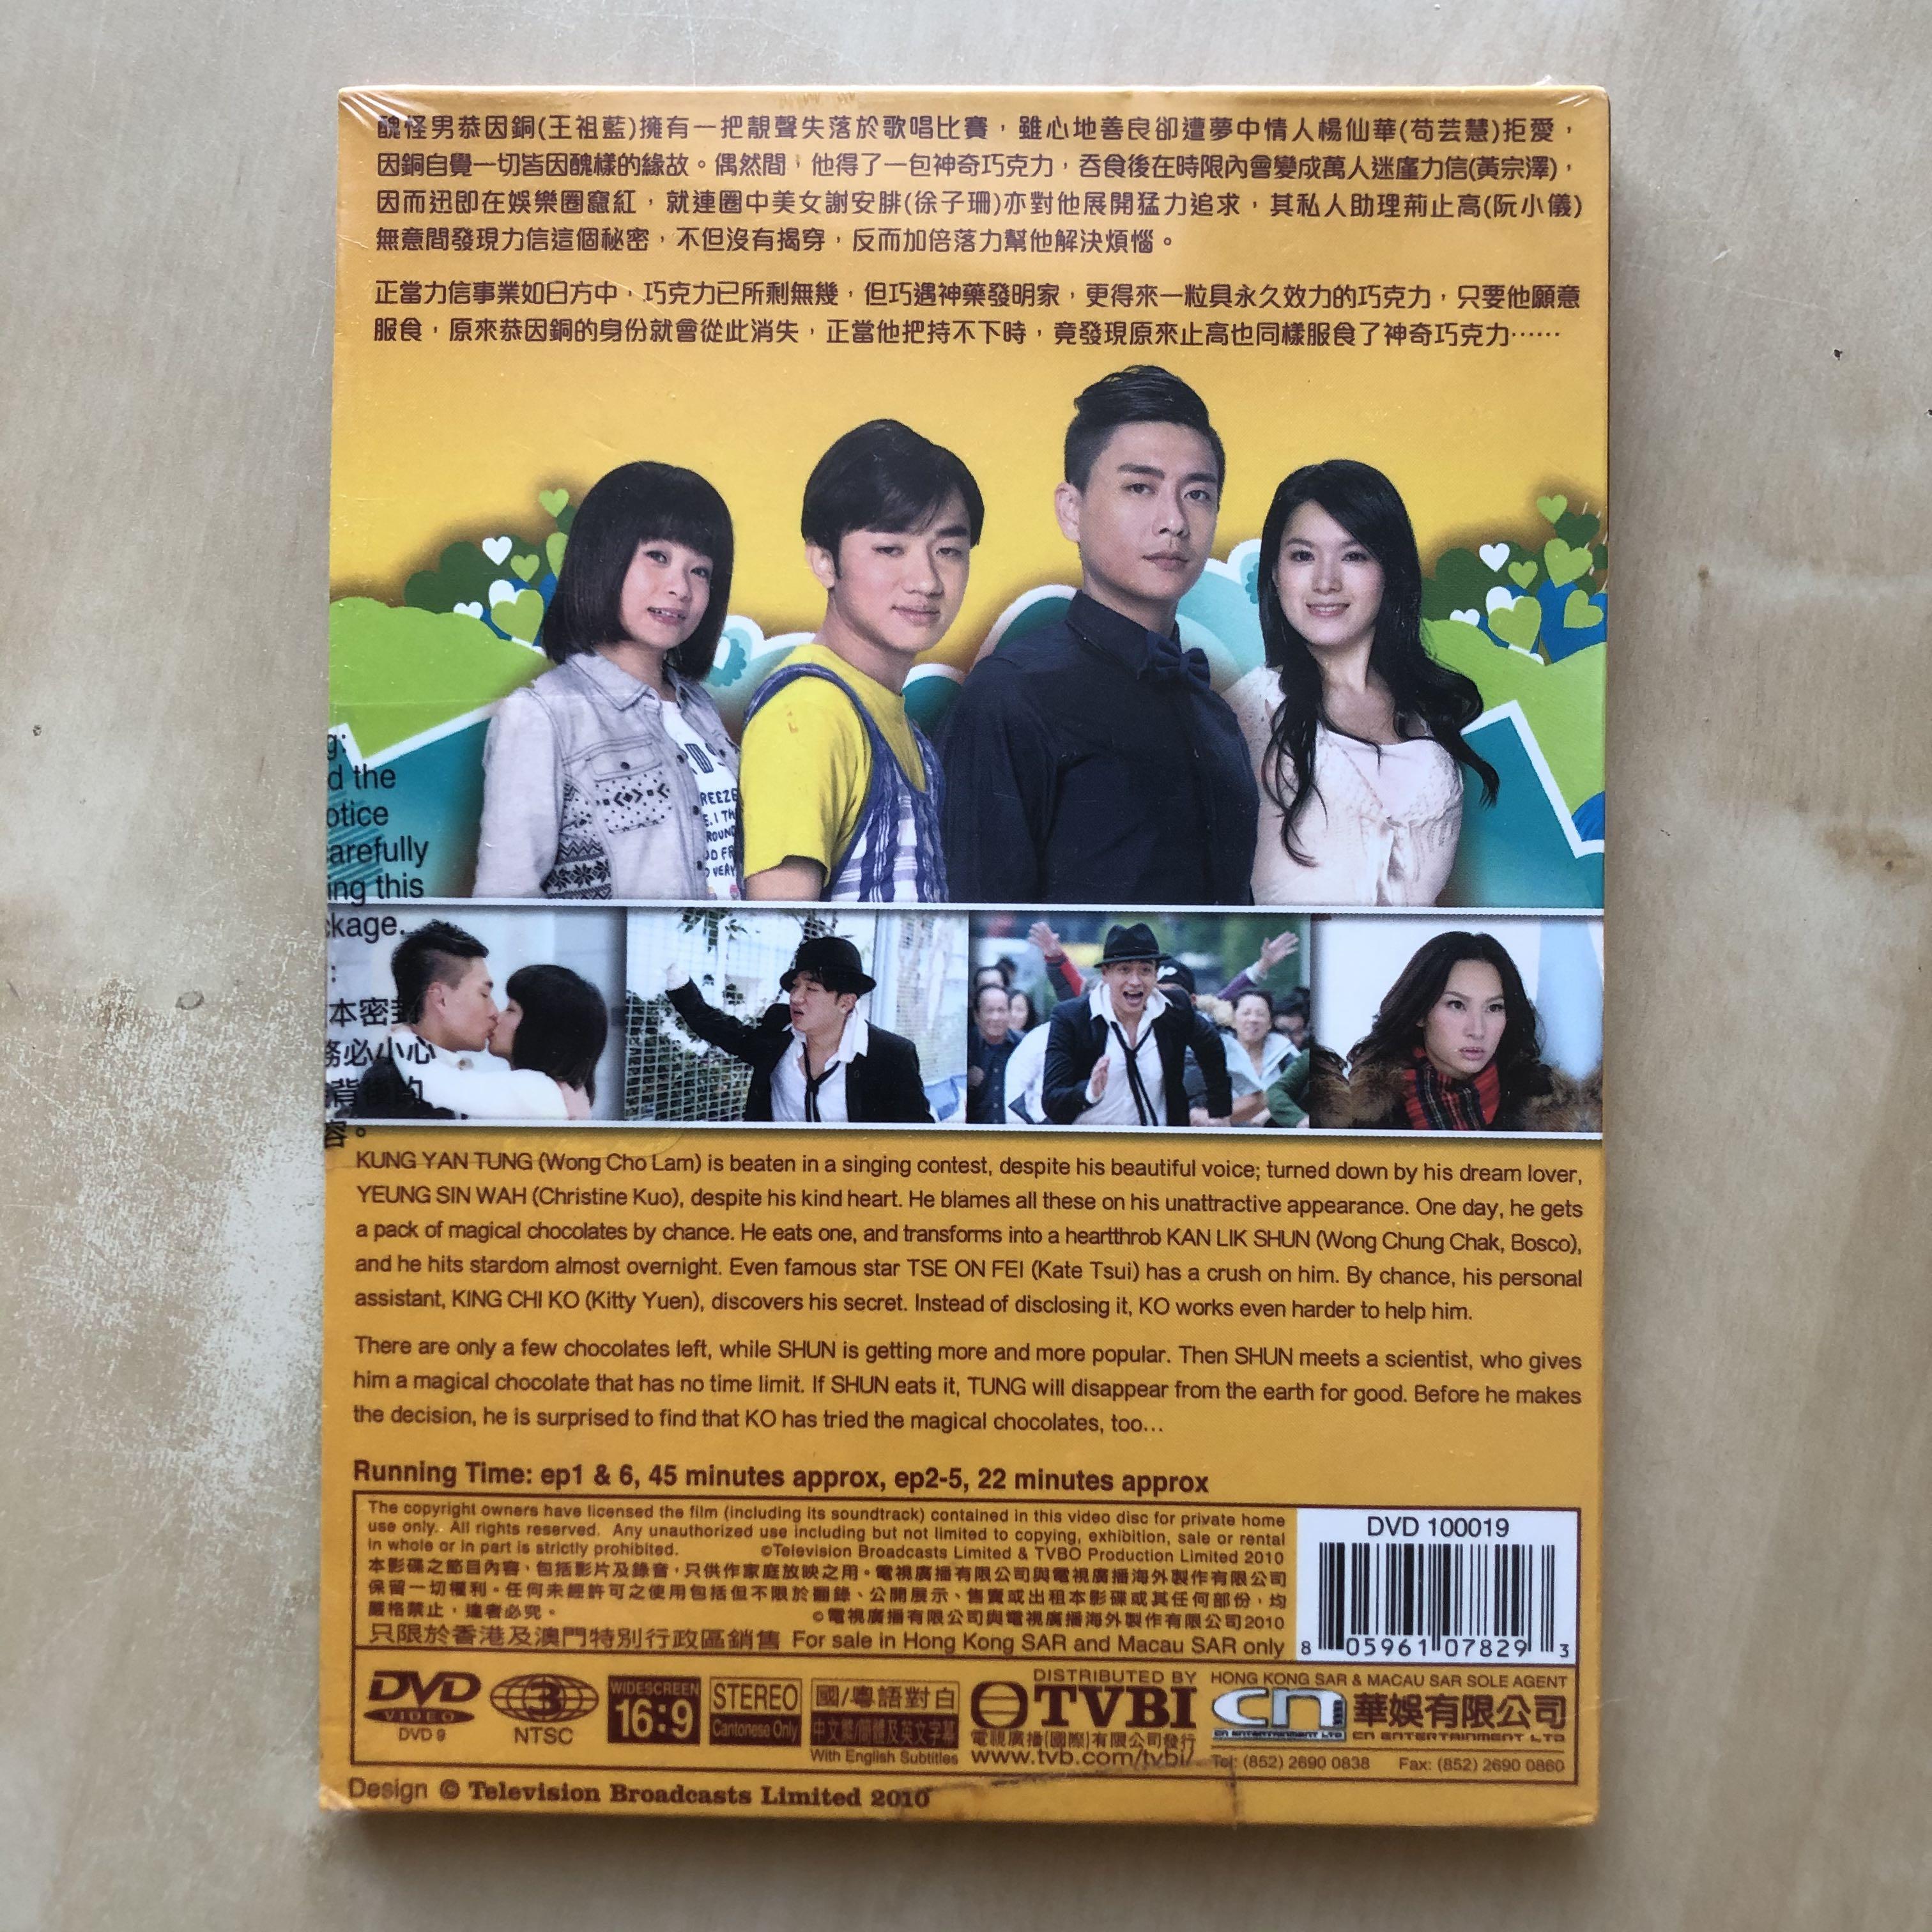 DVD丨情人眼裡高一D (DVD) (完) (TVB劇集) / Don Juan De Mercado (DVD